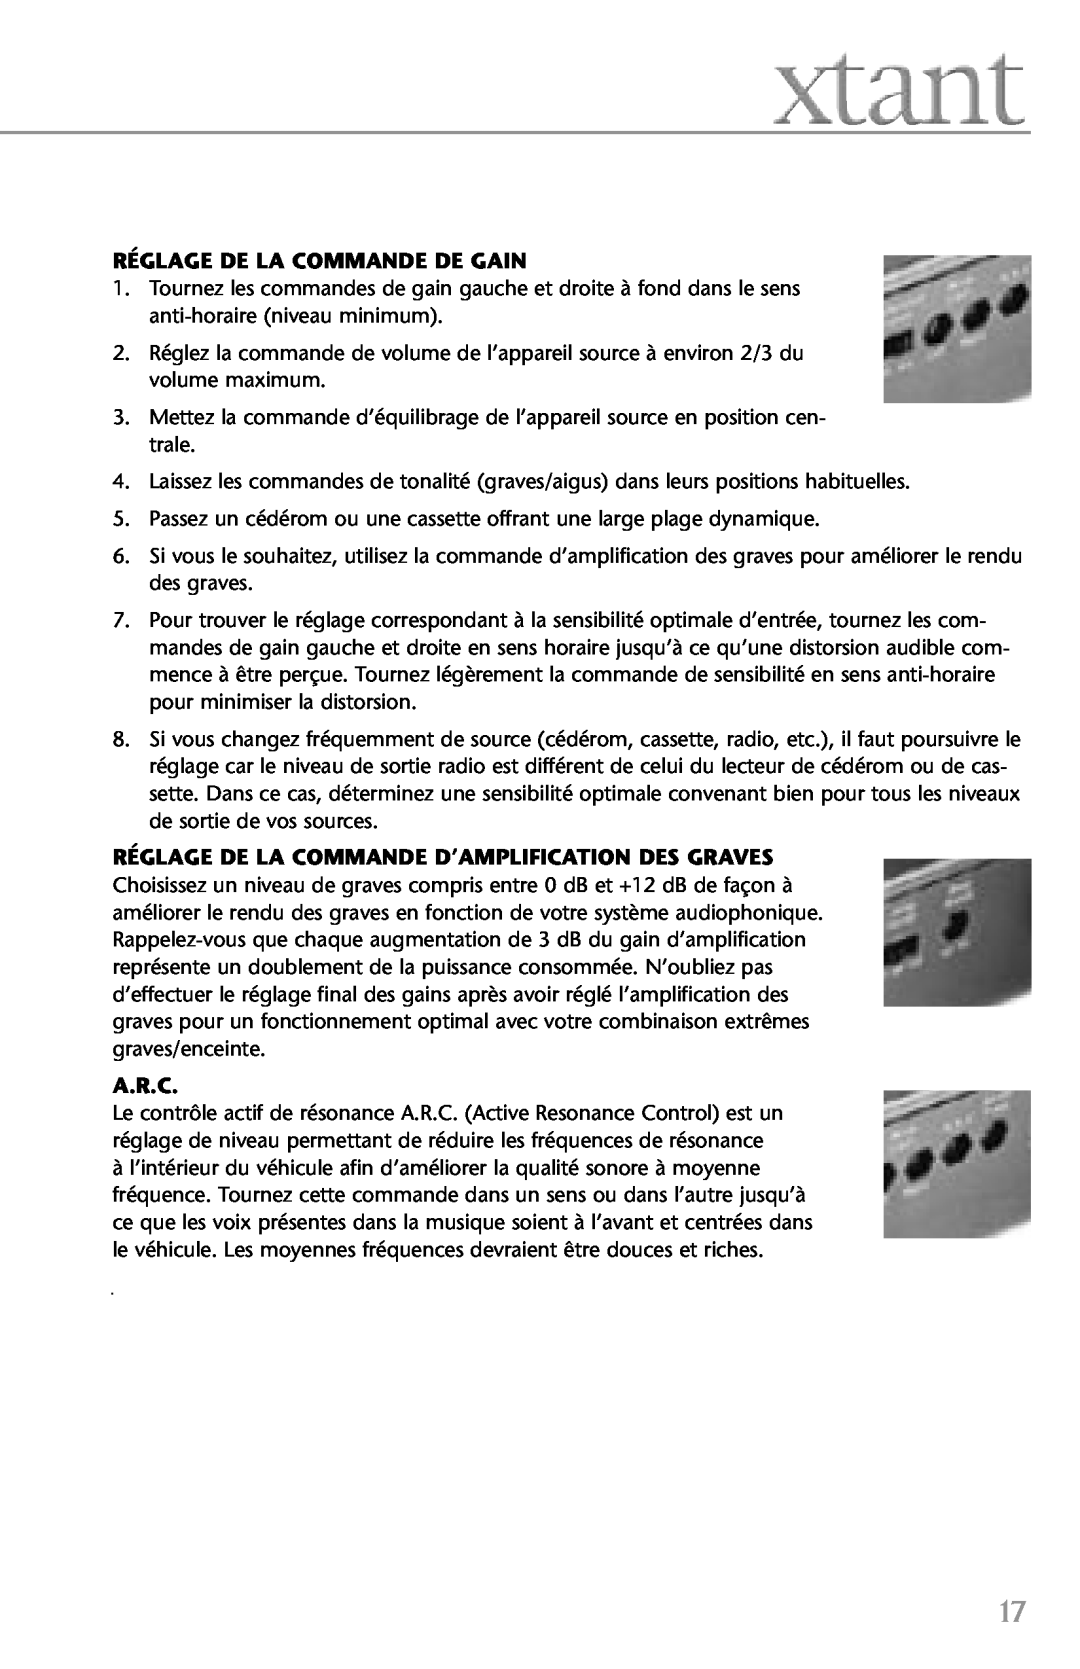 Xtant 4.4, 2.2 owner manual Réglage De La Commande De Gain, Réglage De La Commande D’Amplification Des Graves, A.R.C 